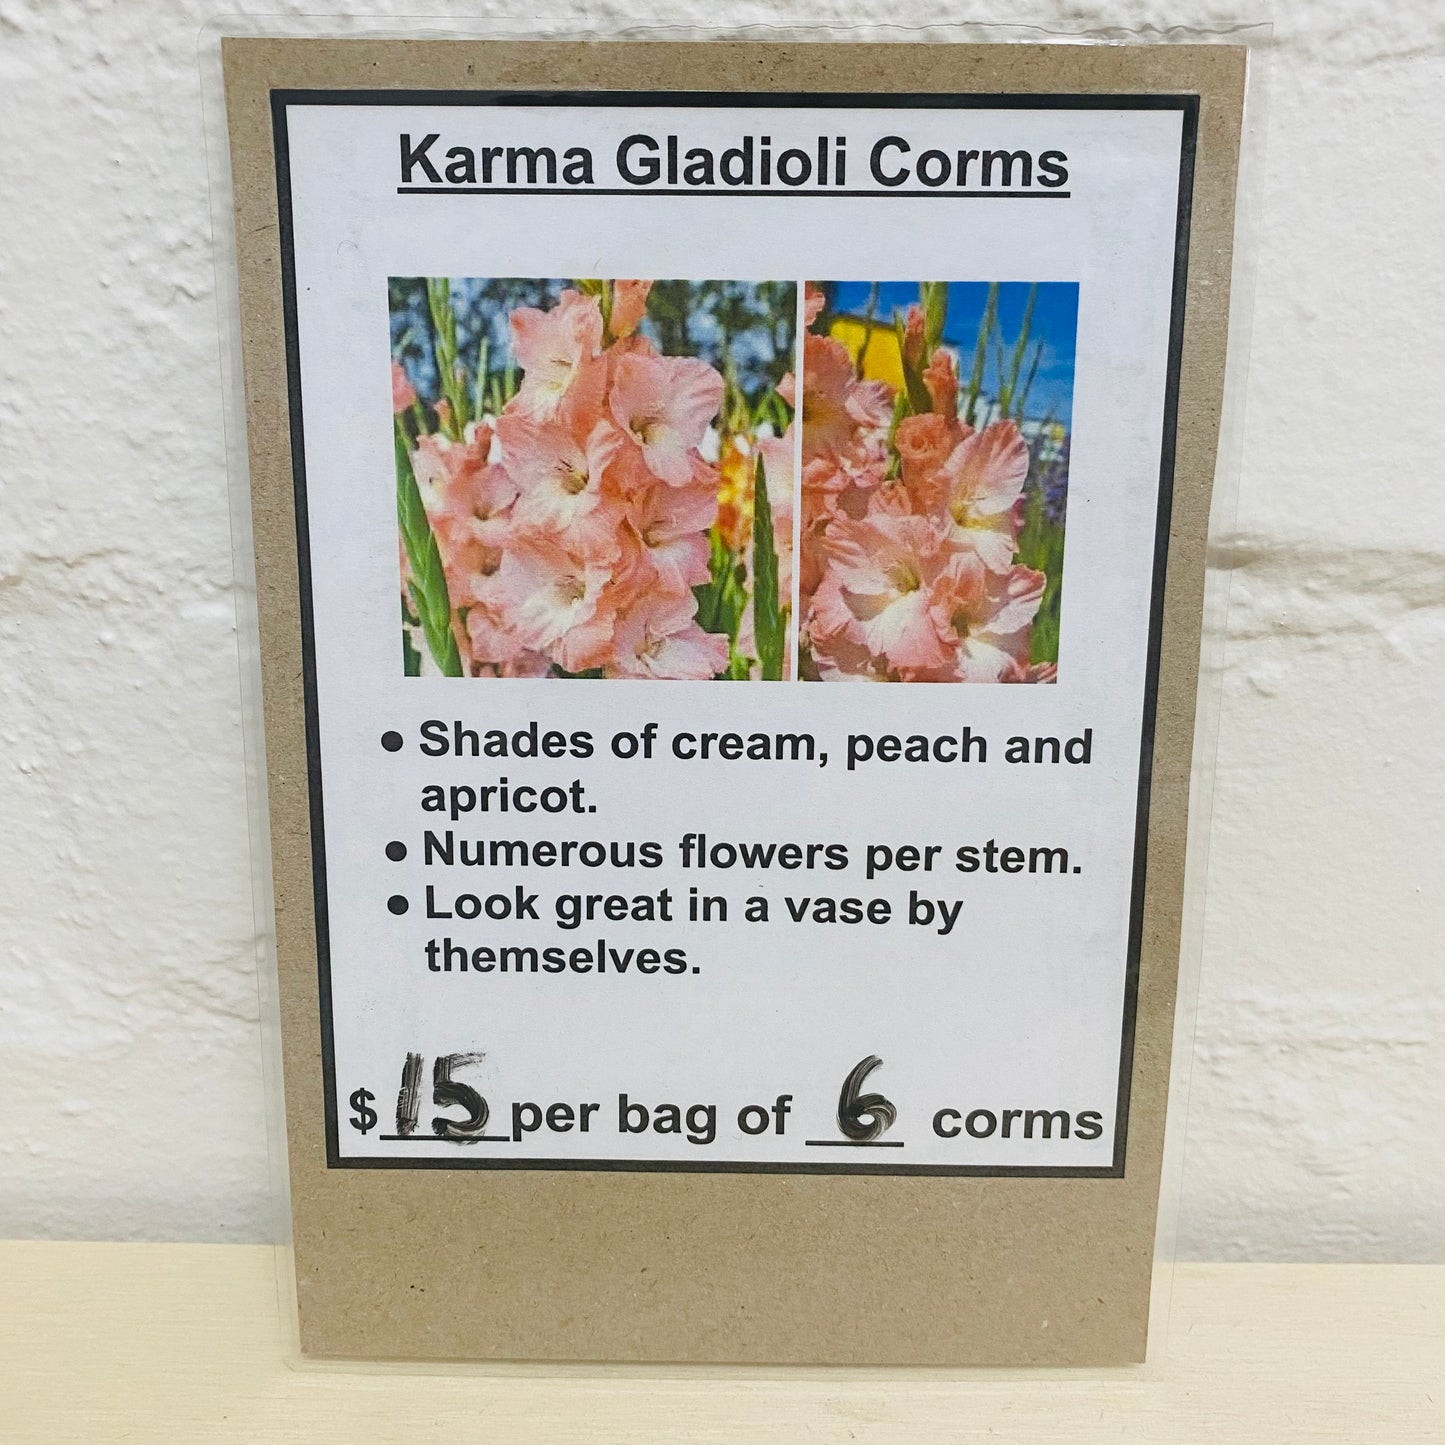 Karma Gladioli Corms by Creekland Flowers